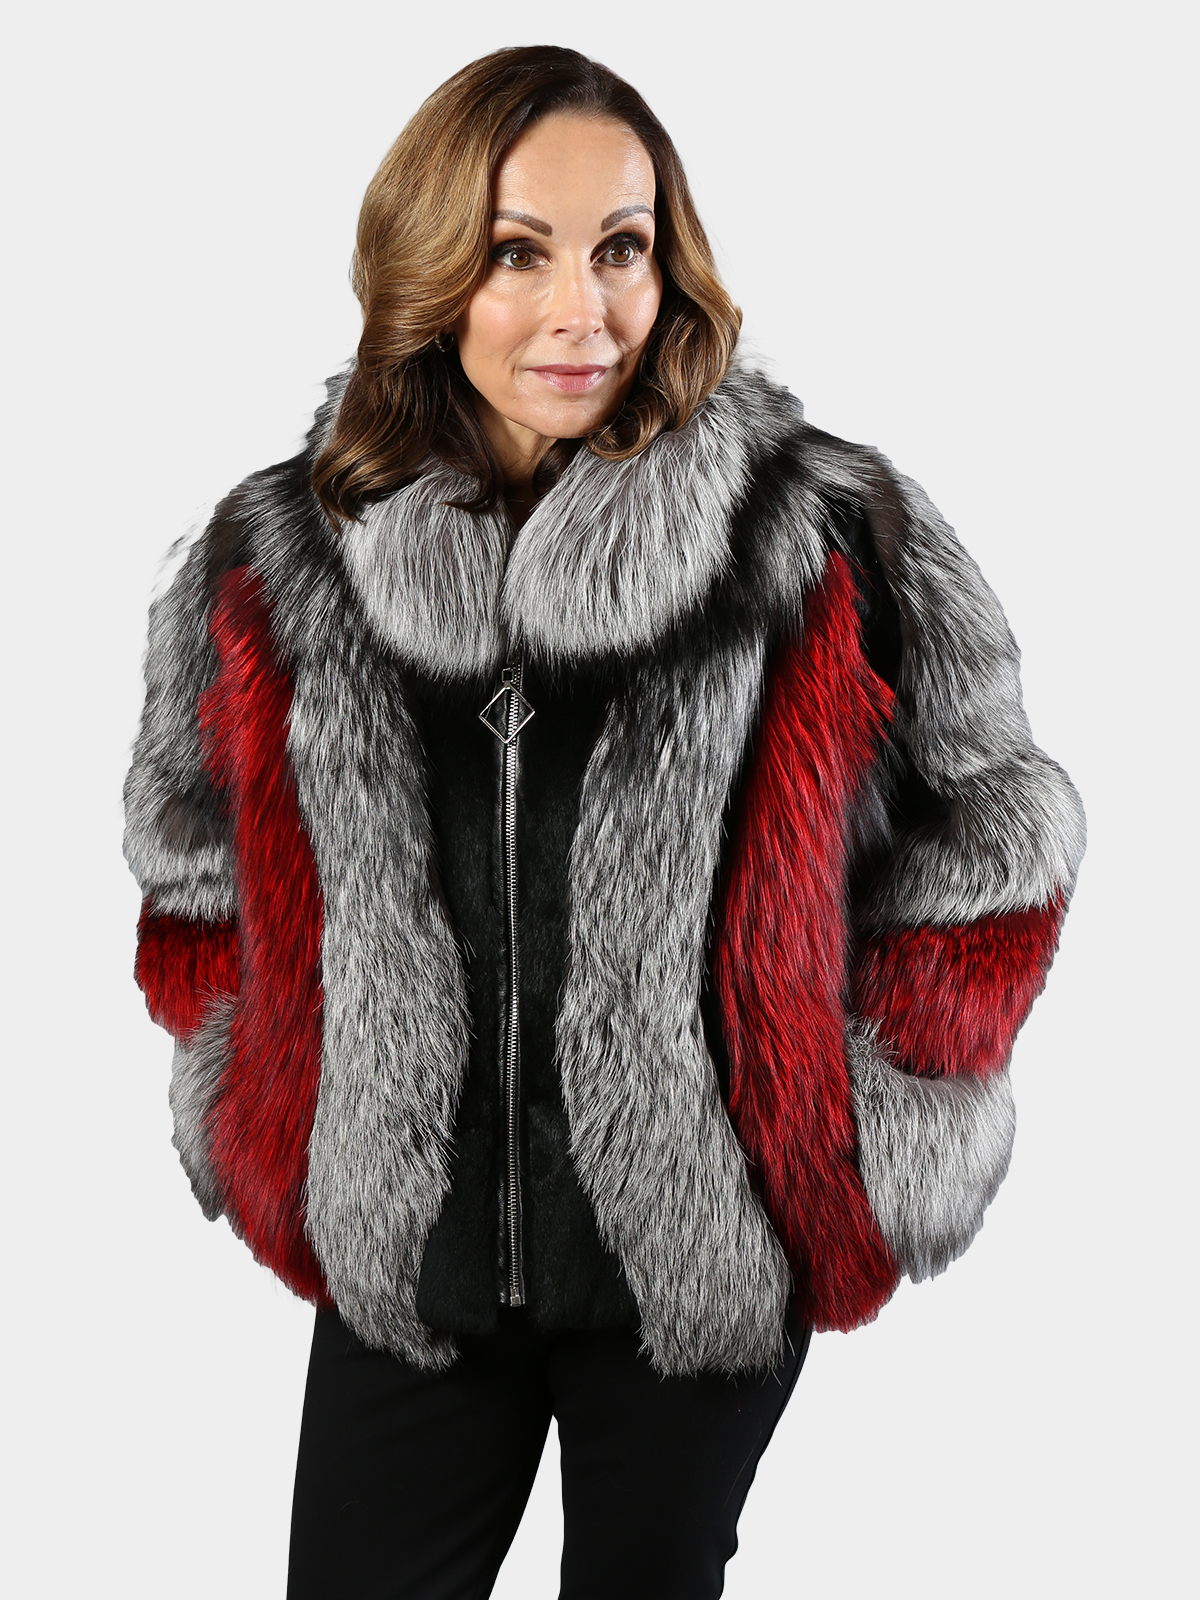 Silver Fox Fur Jacket Fur Coat Real Fur Jacket Women Coat 